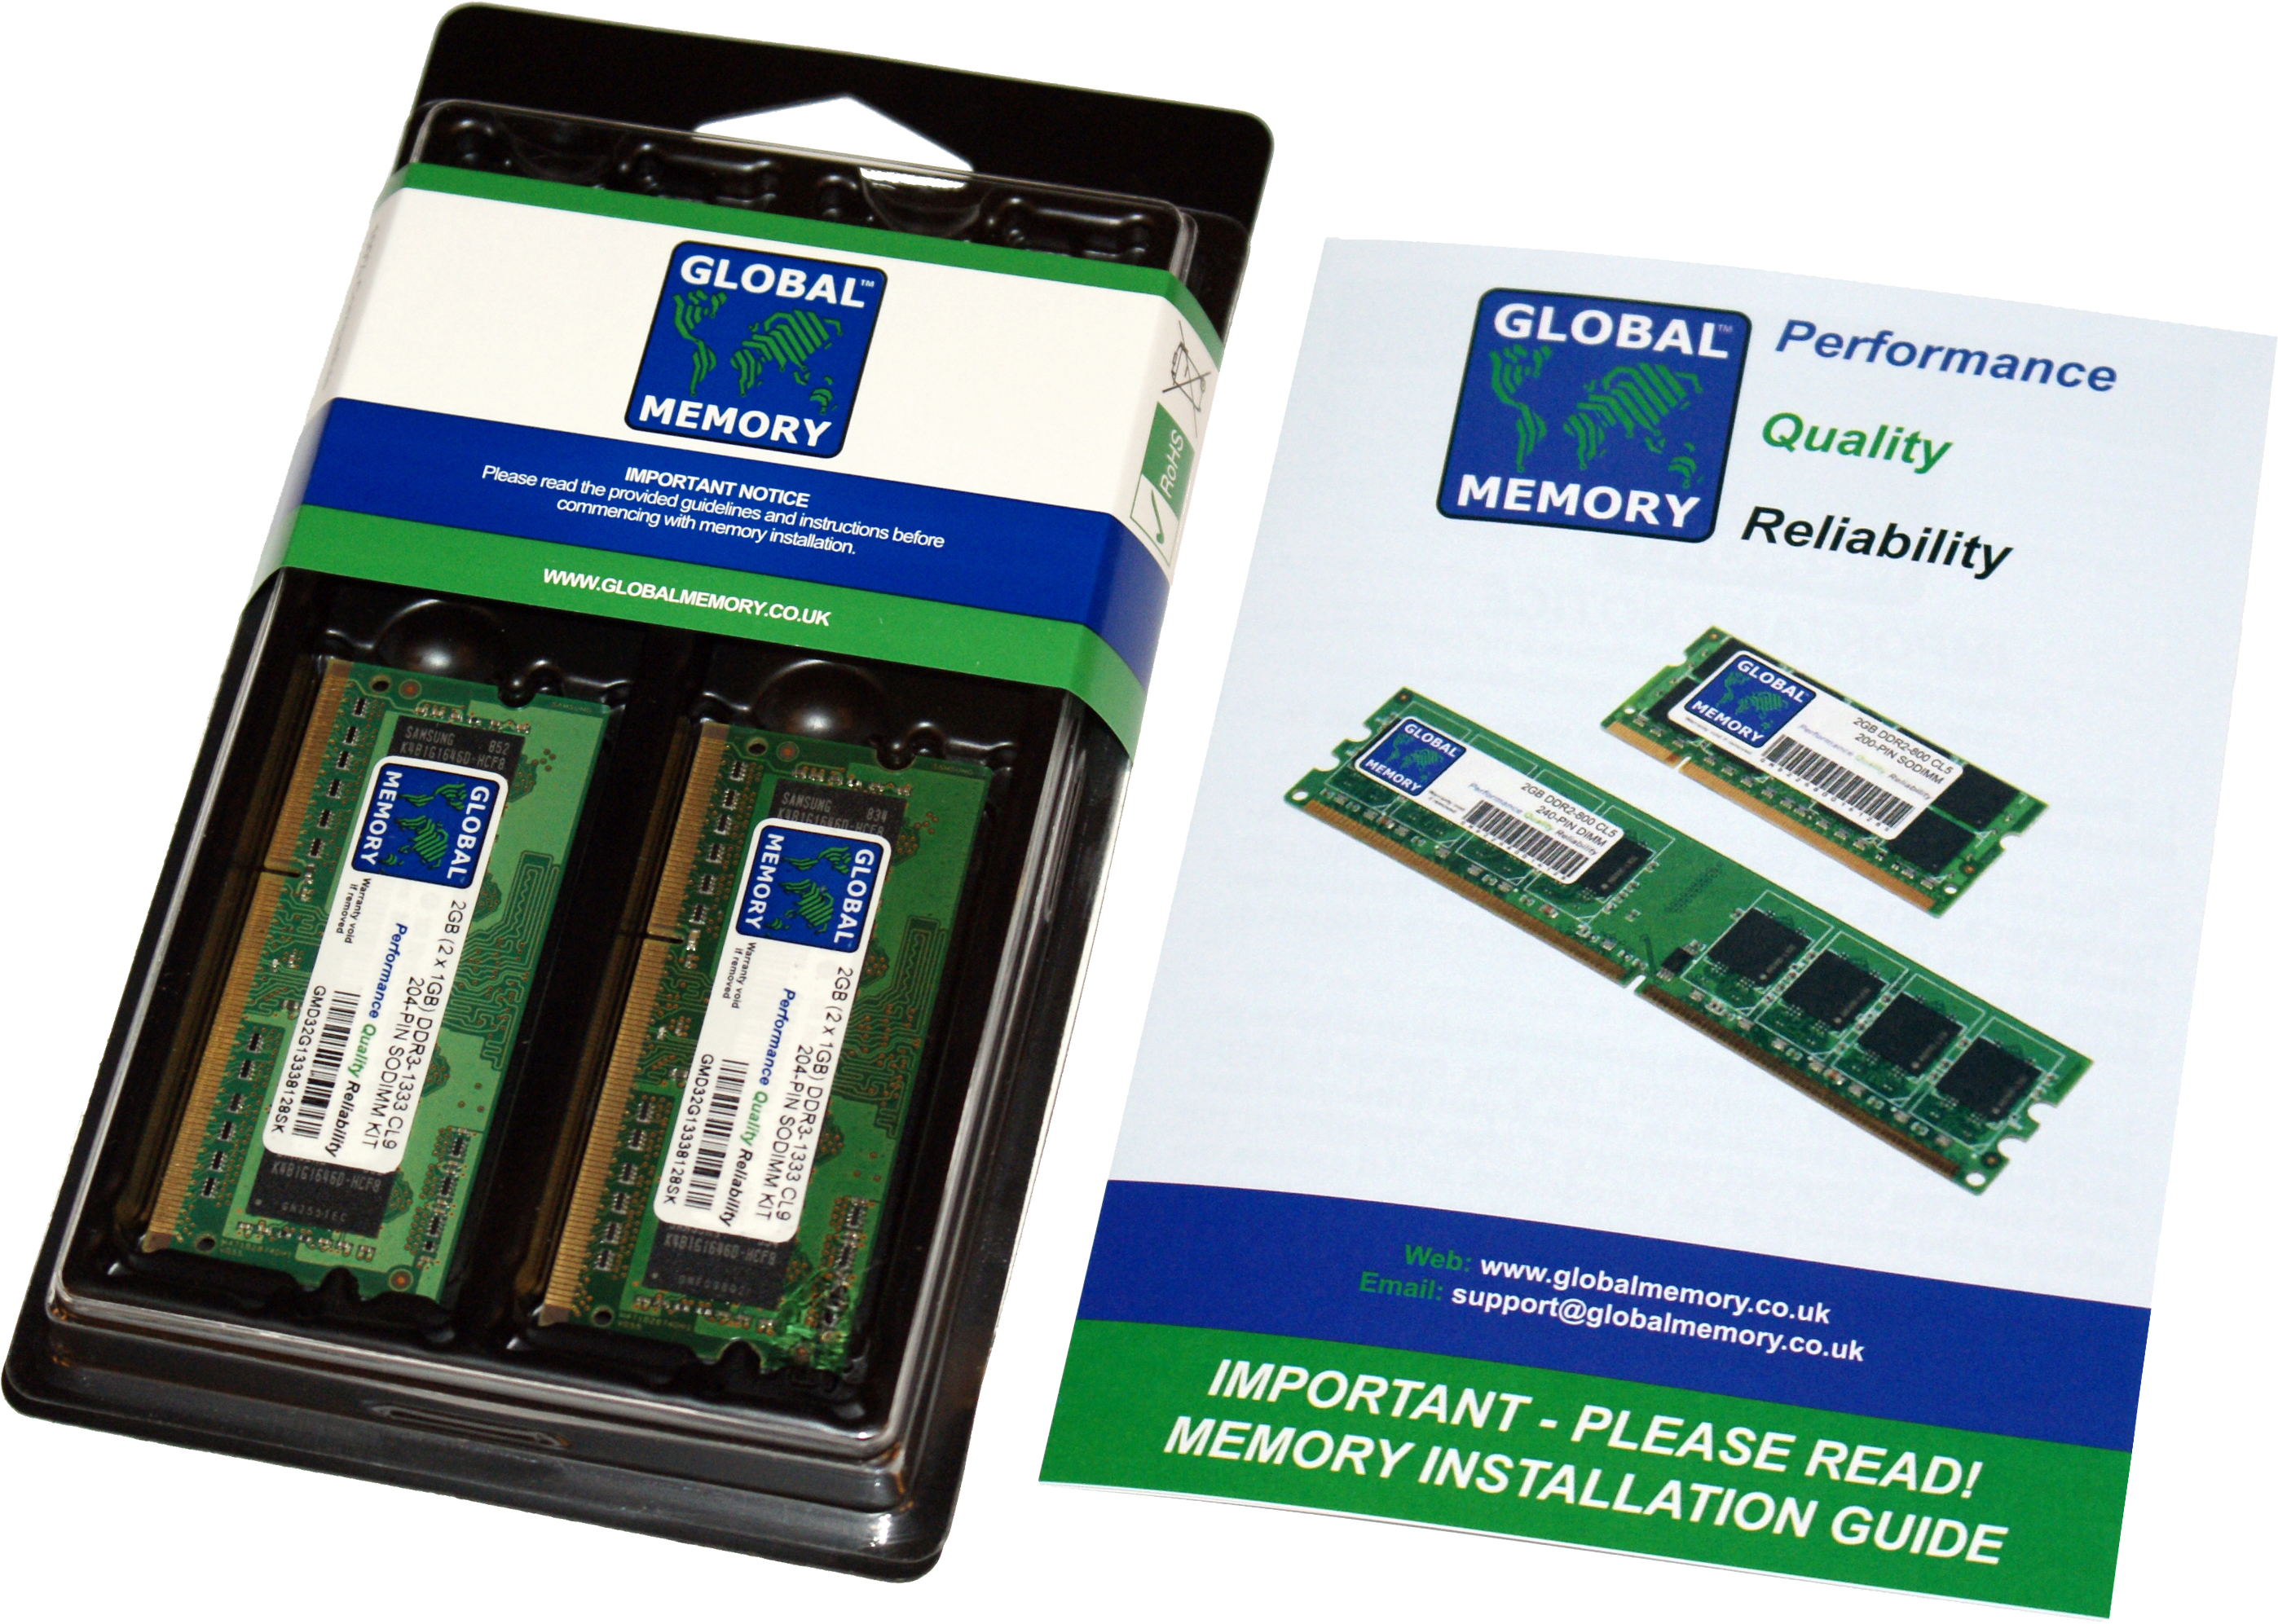 16GB (2 x 8GB) DDR4 2666MHz PC4-21300 260-PIN SODIMM MEMORY RAM KIT FOR INTEL MAC MINI (2018)